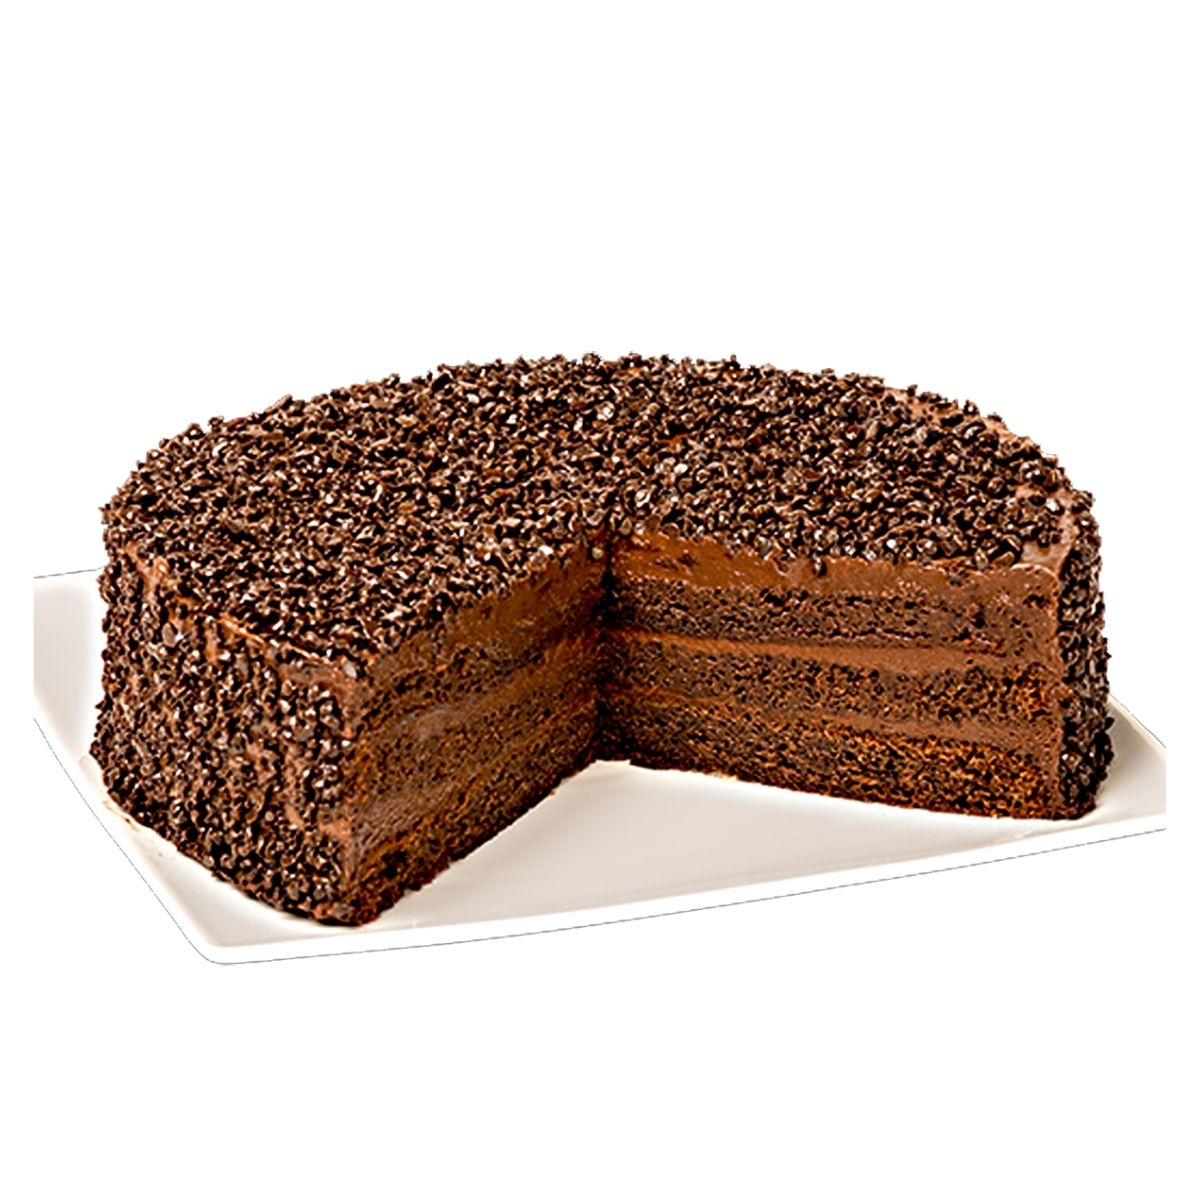 Death by Chocolate Cake. 12 slice. Frozen - CMKfoods